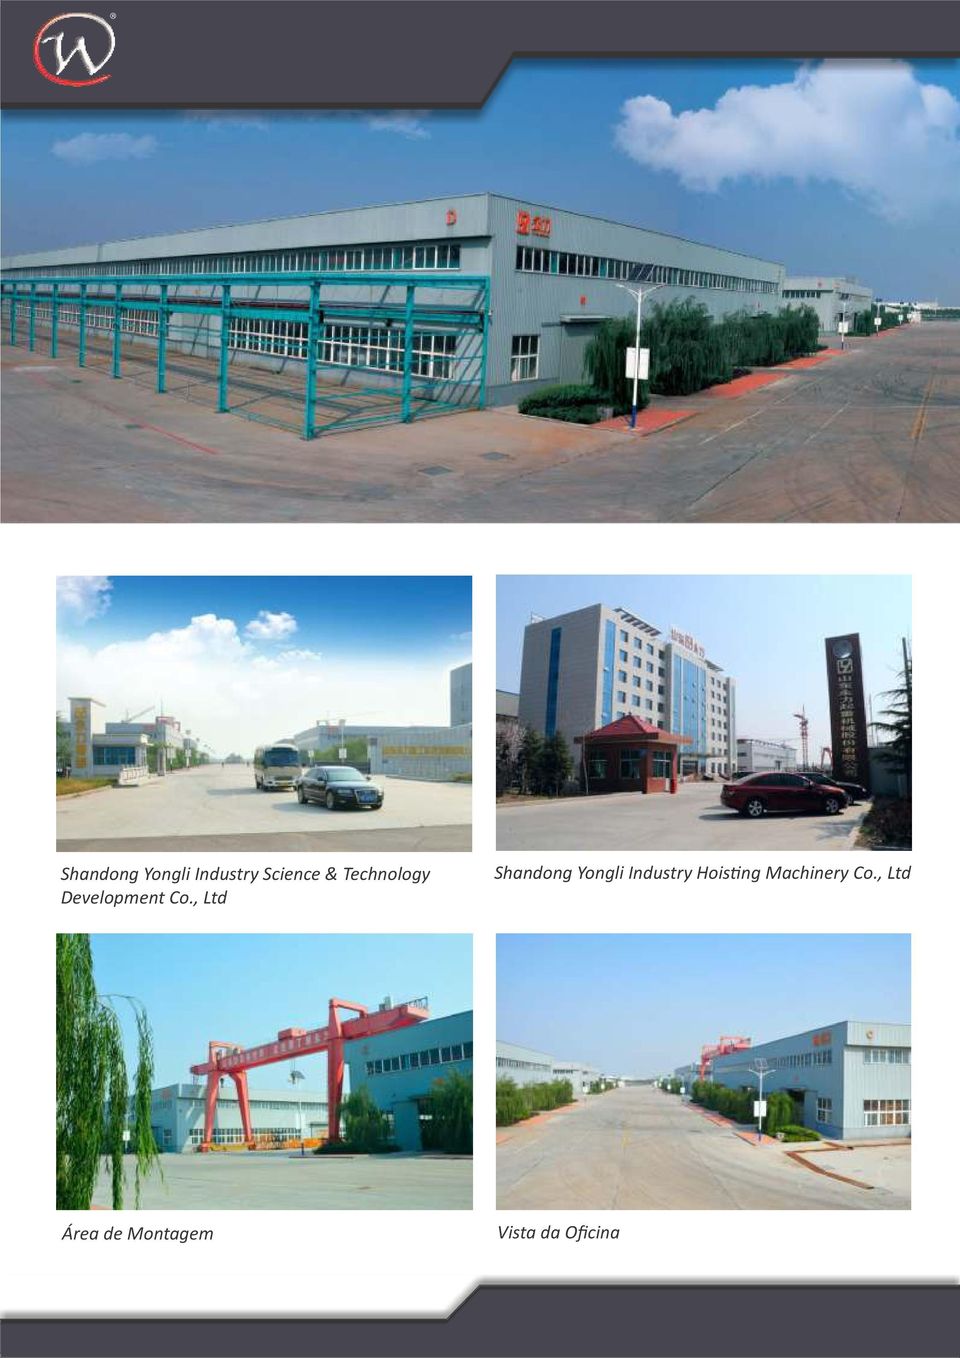 , Ltd Shandong Yongli Industry Hois